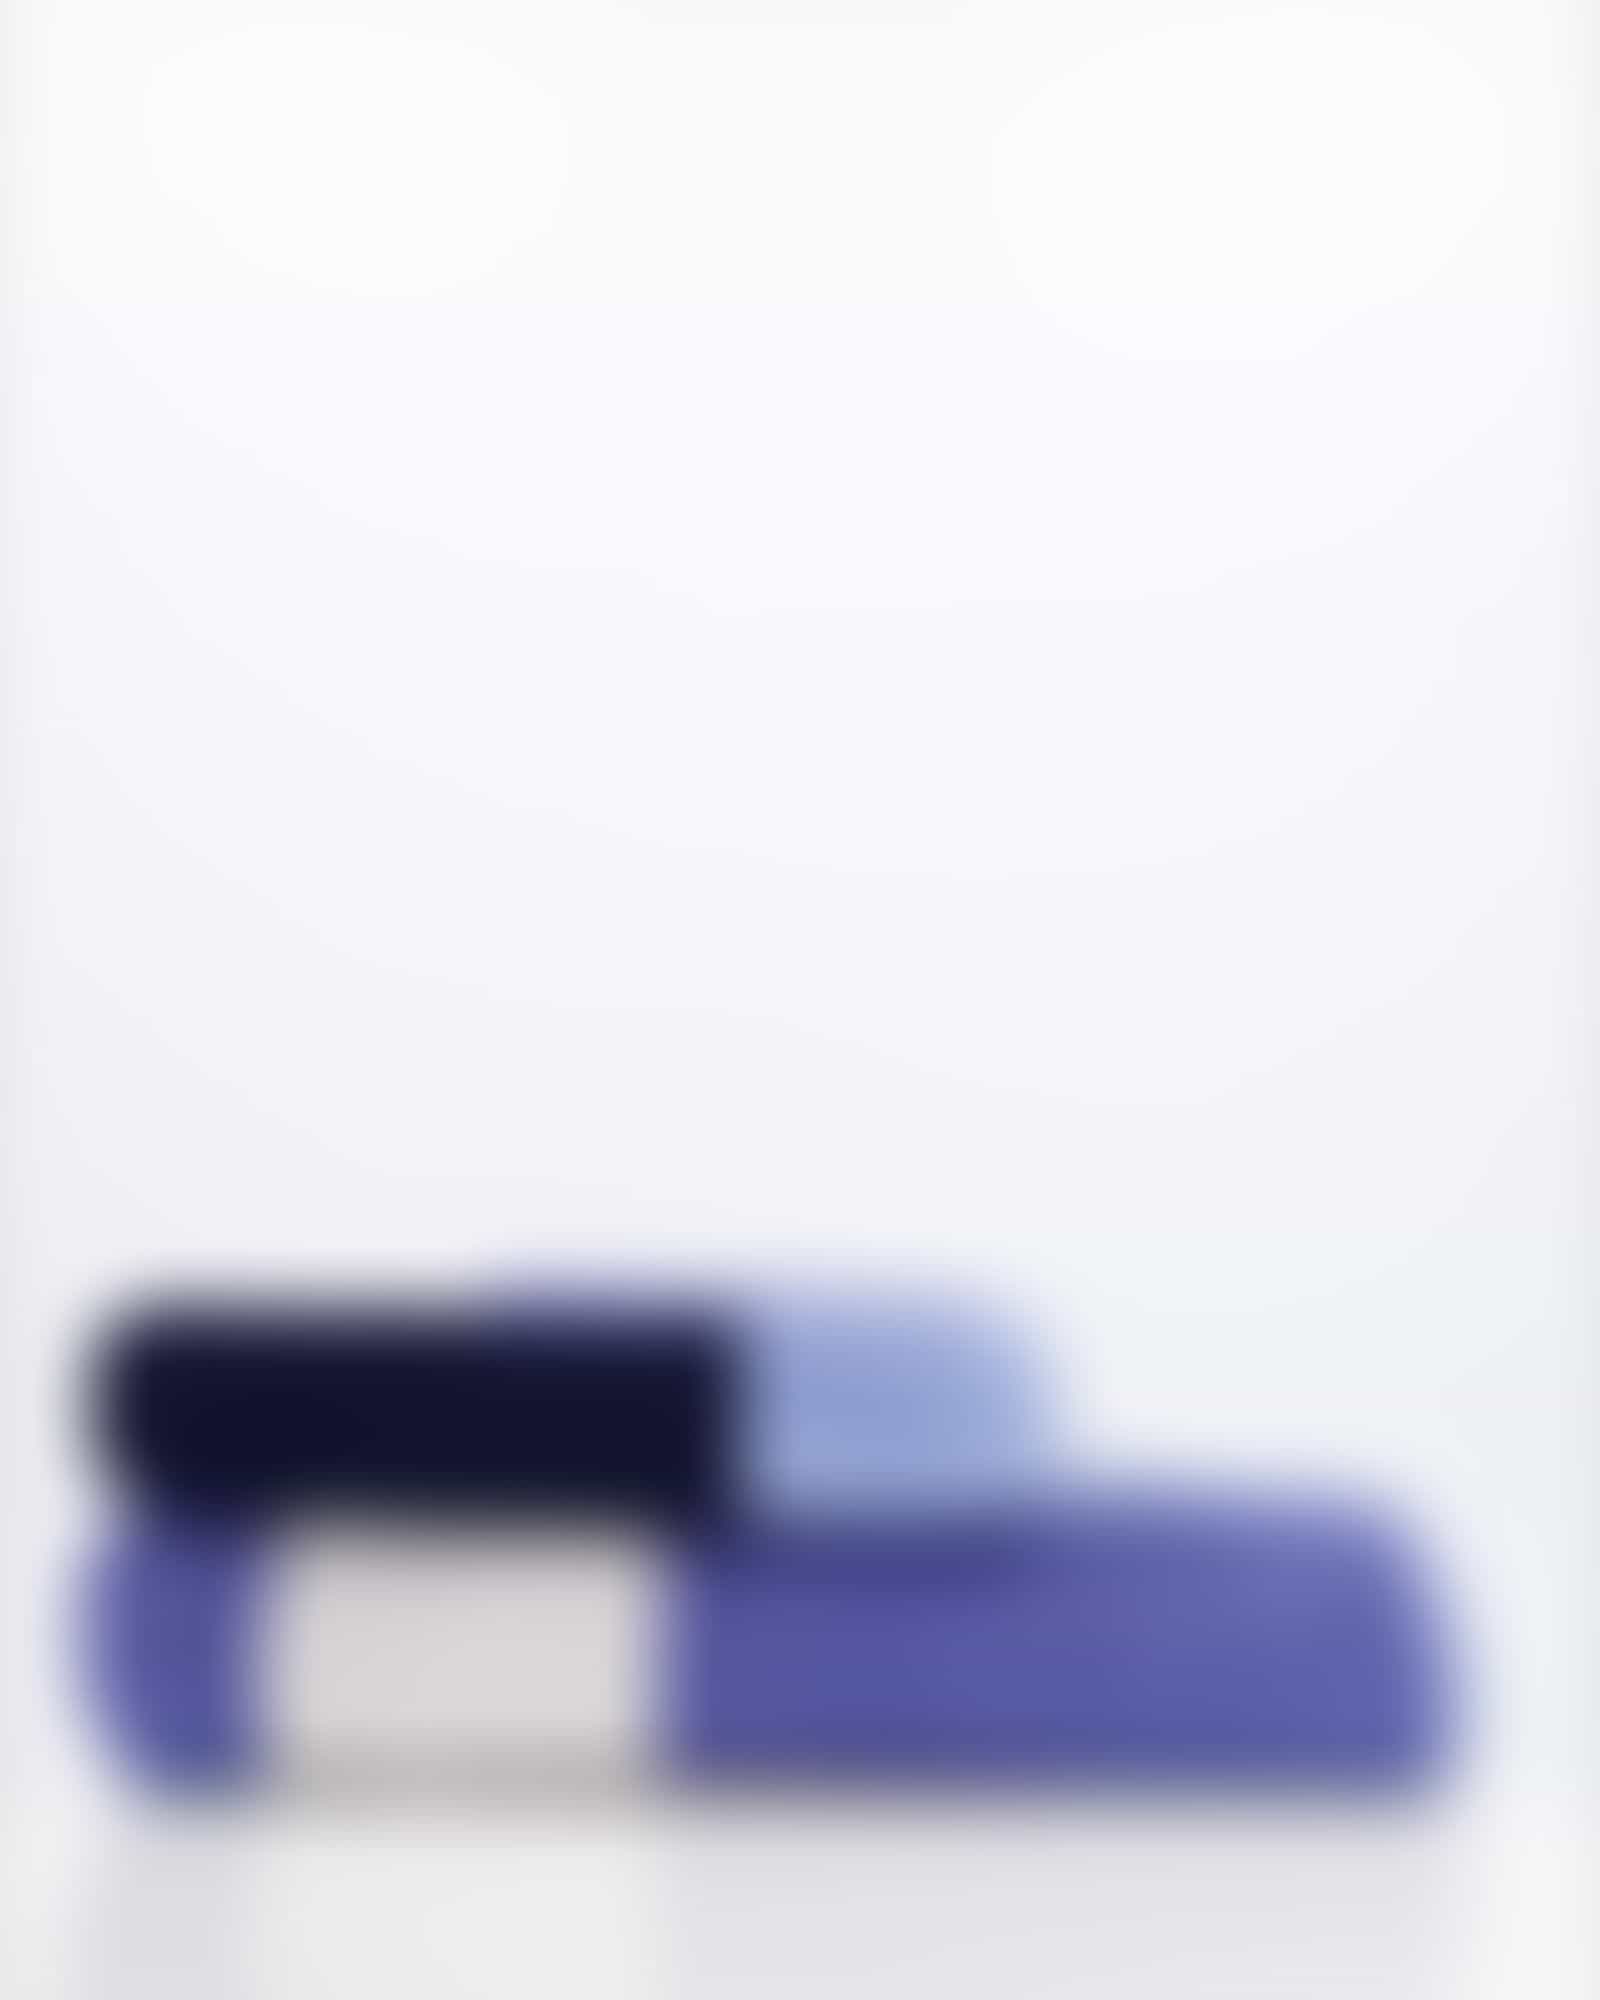 Cawö Handtücher Shades Karo 6236 - Farbe: aqua - 11 - Duschtuch 70x140 cm